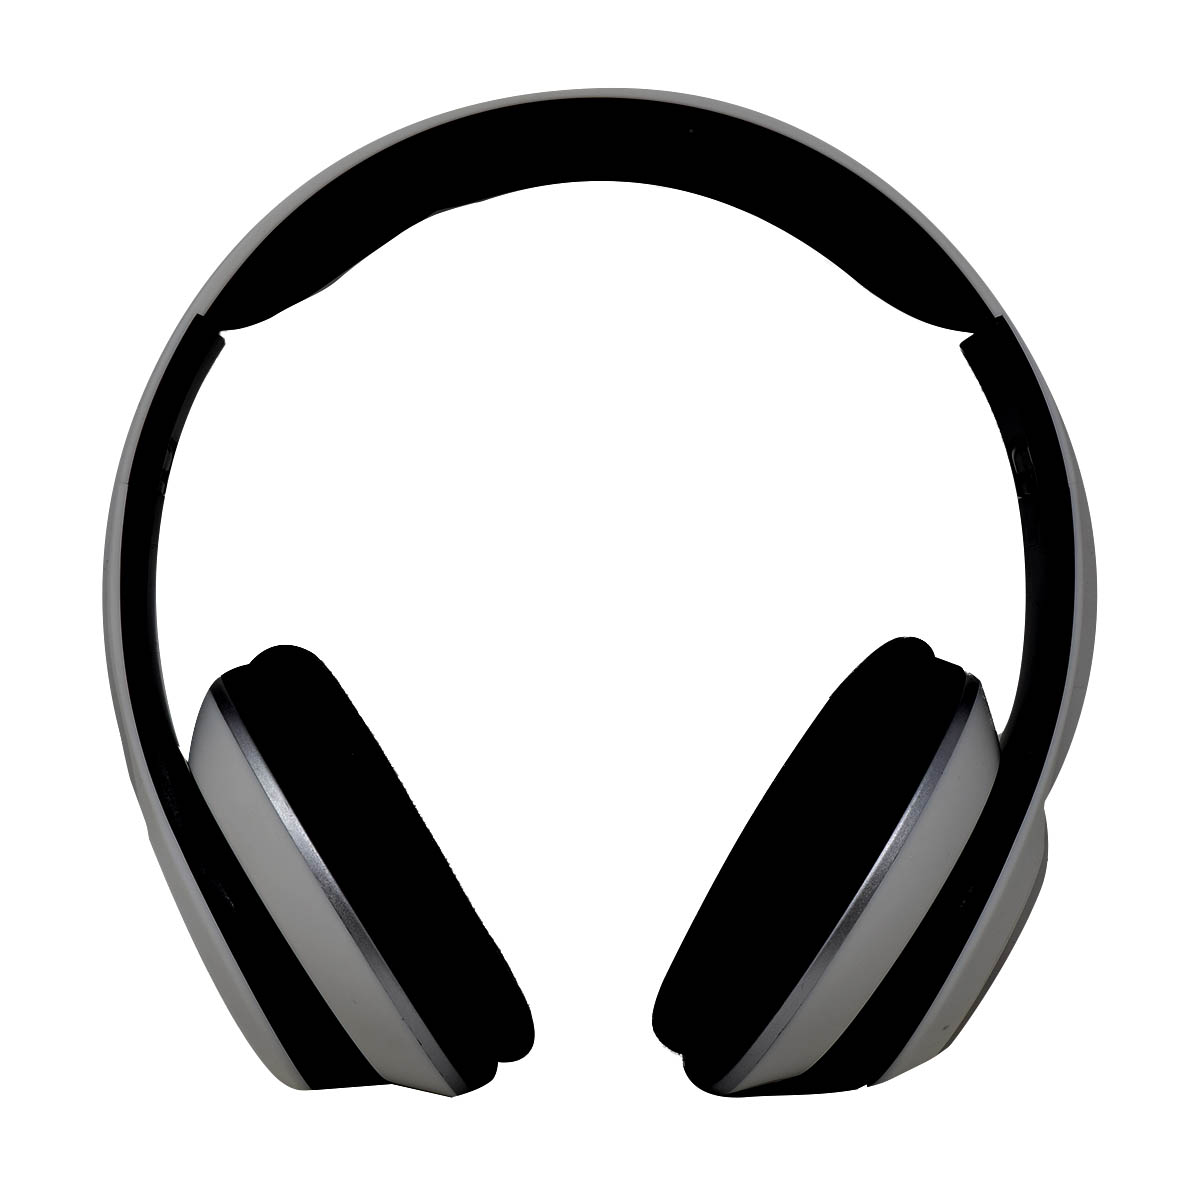 AUDIFONOS OVER-EAR BLUETOOTH NBH-01 SONIDO HI-FI 3.5MM RADIO FM MICRO SD 3.5MML MANOS LIBRES RUBBERIZED BLANCO -